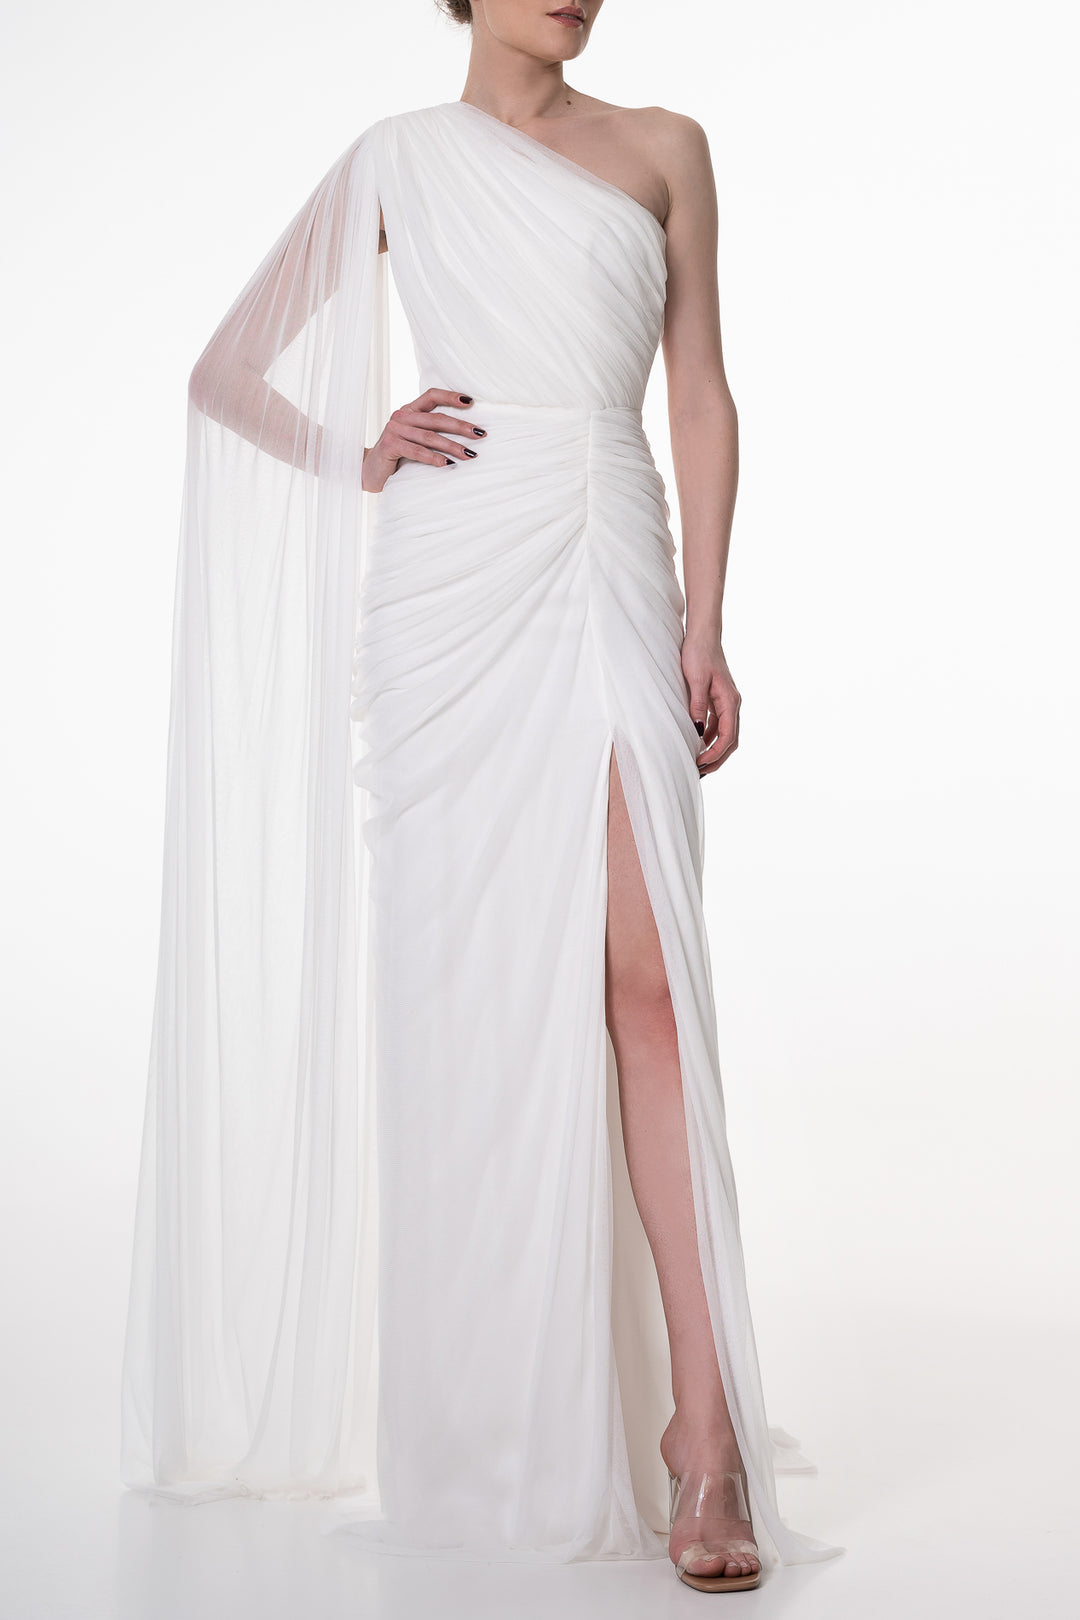 Zeisha Ivory Silk Tulle Dress